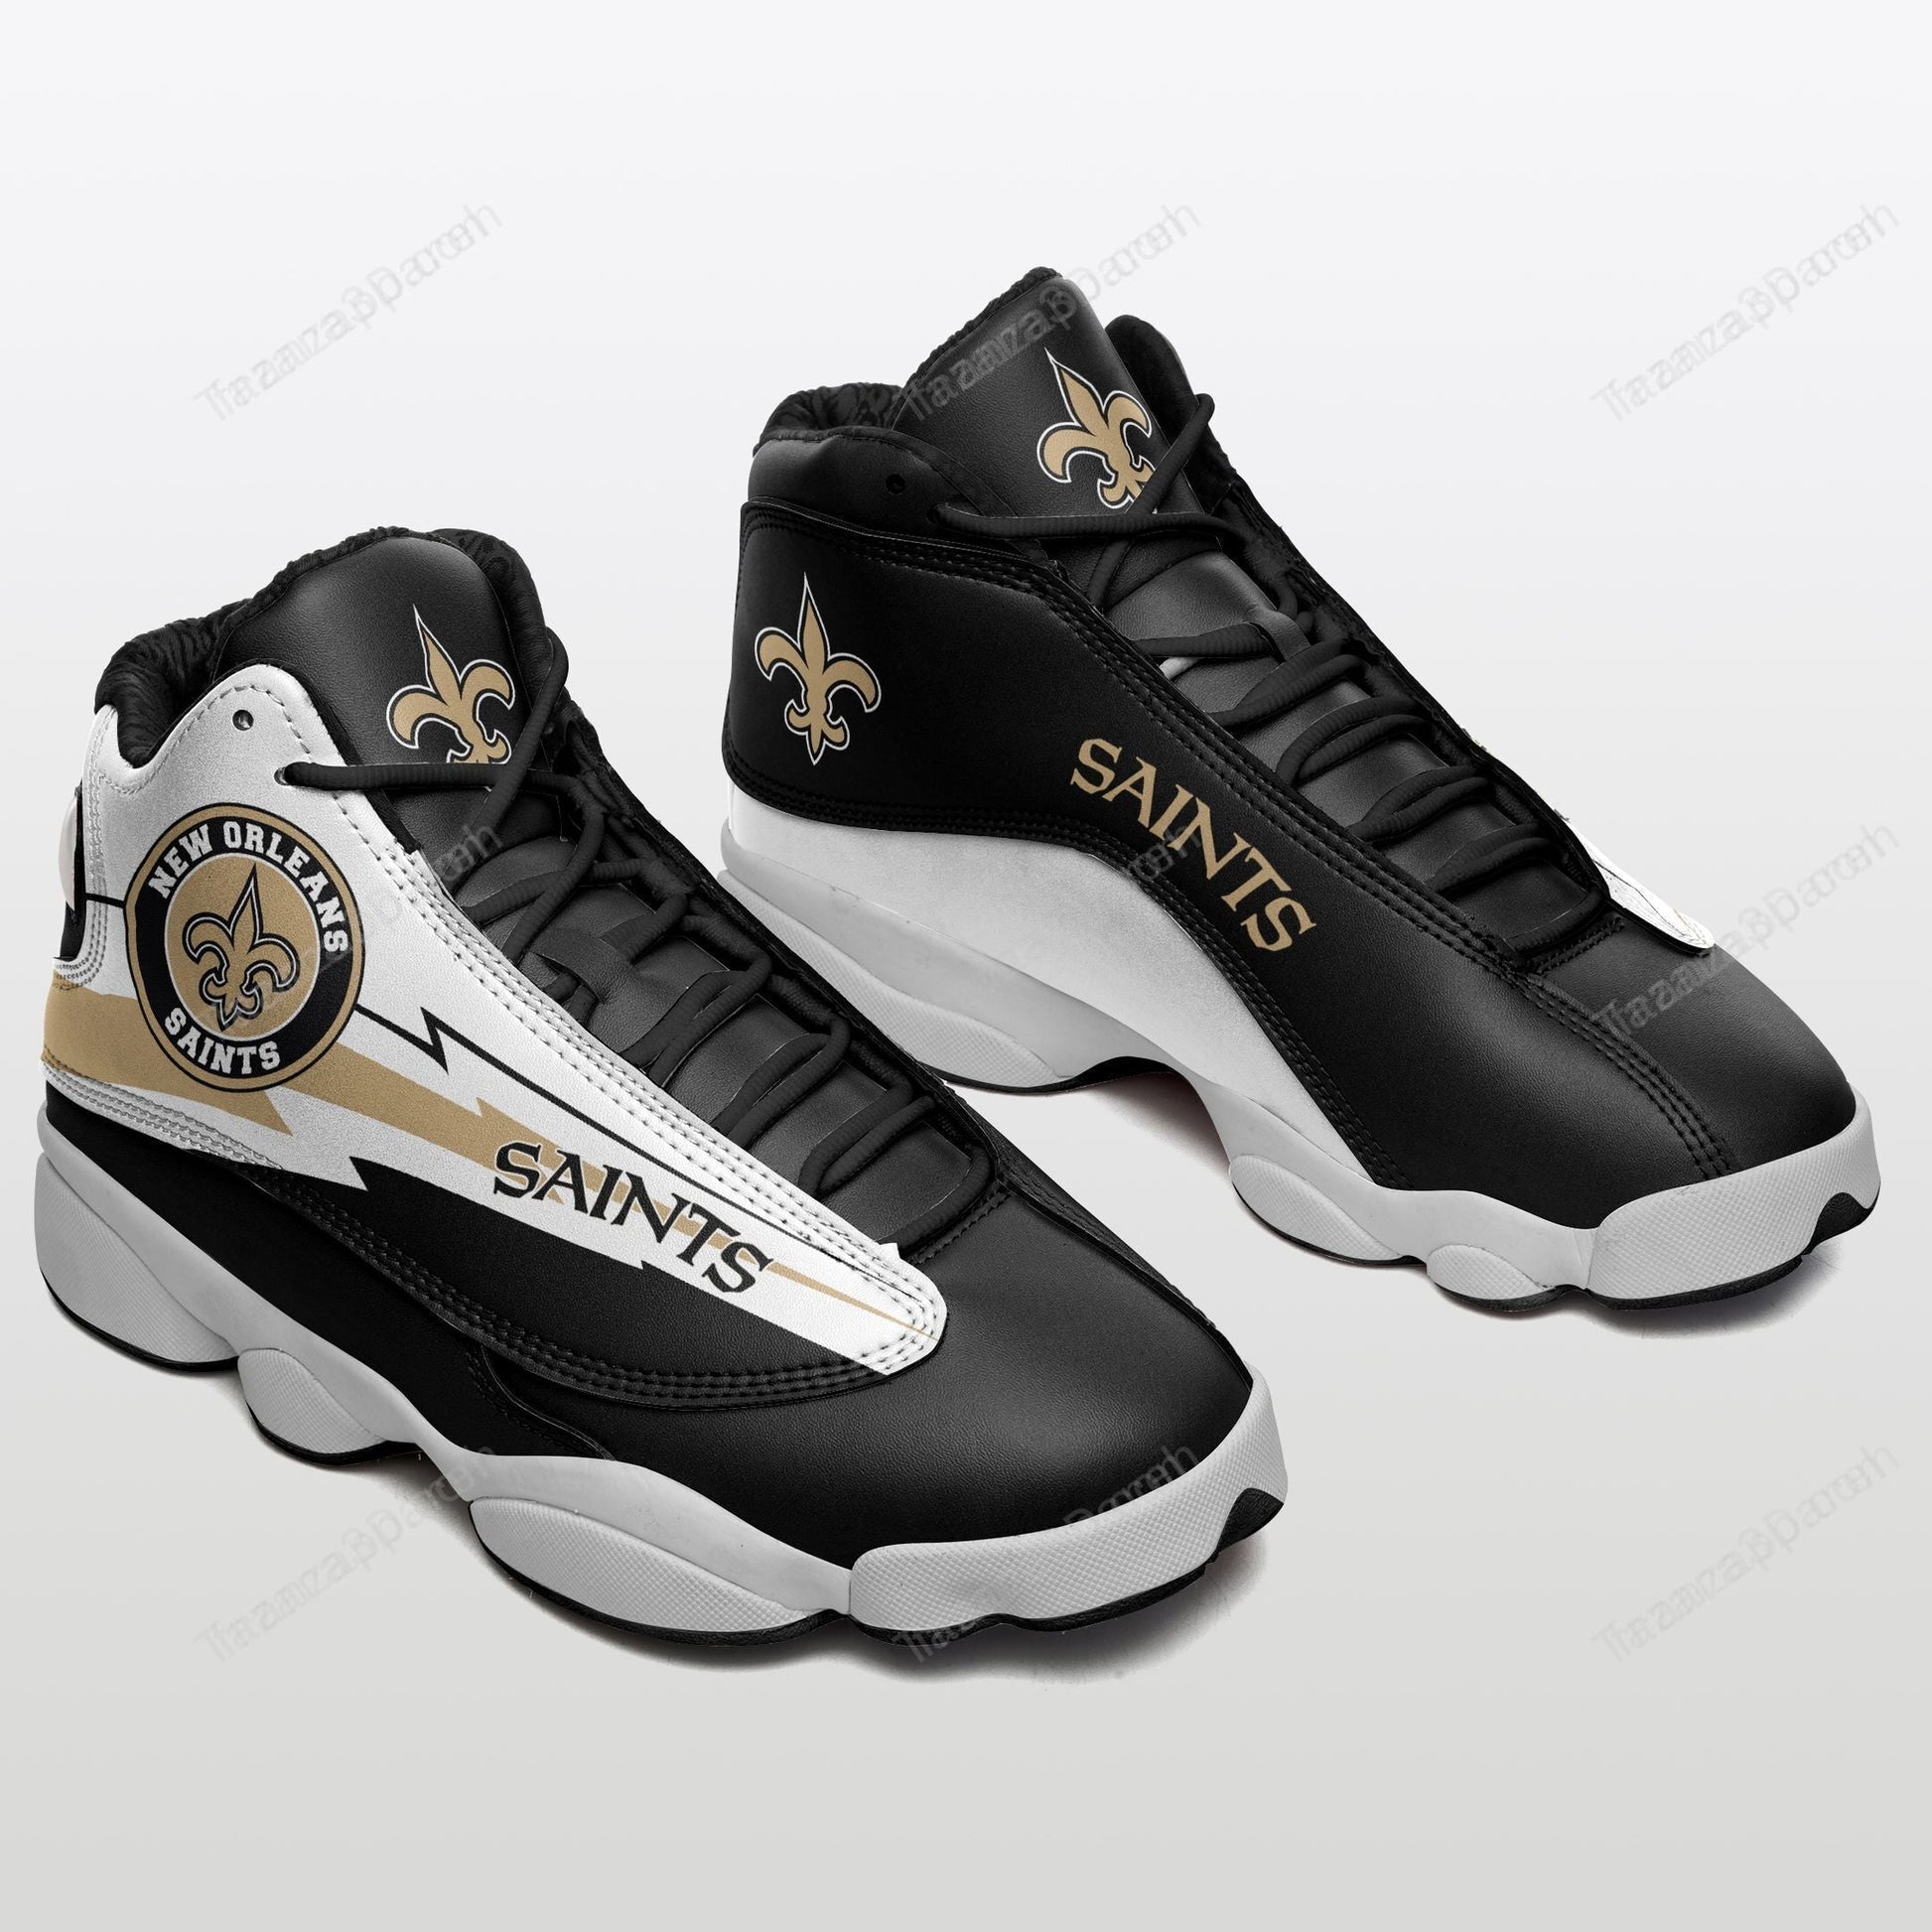 New Orleans Saints Custom Shoes Sneakers 576-Gear Wanta